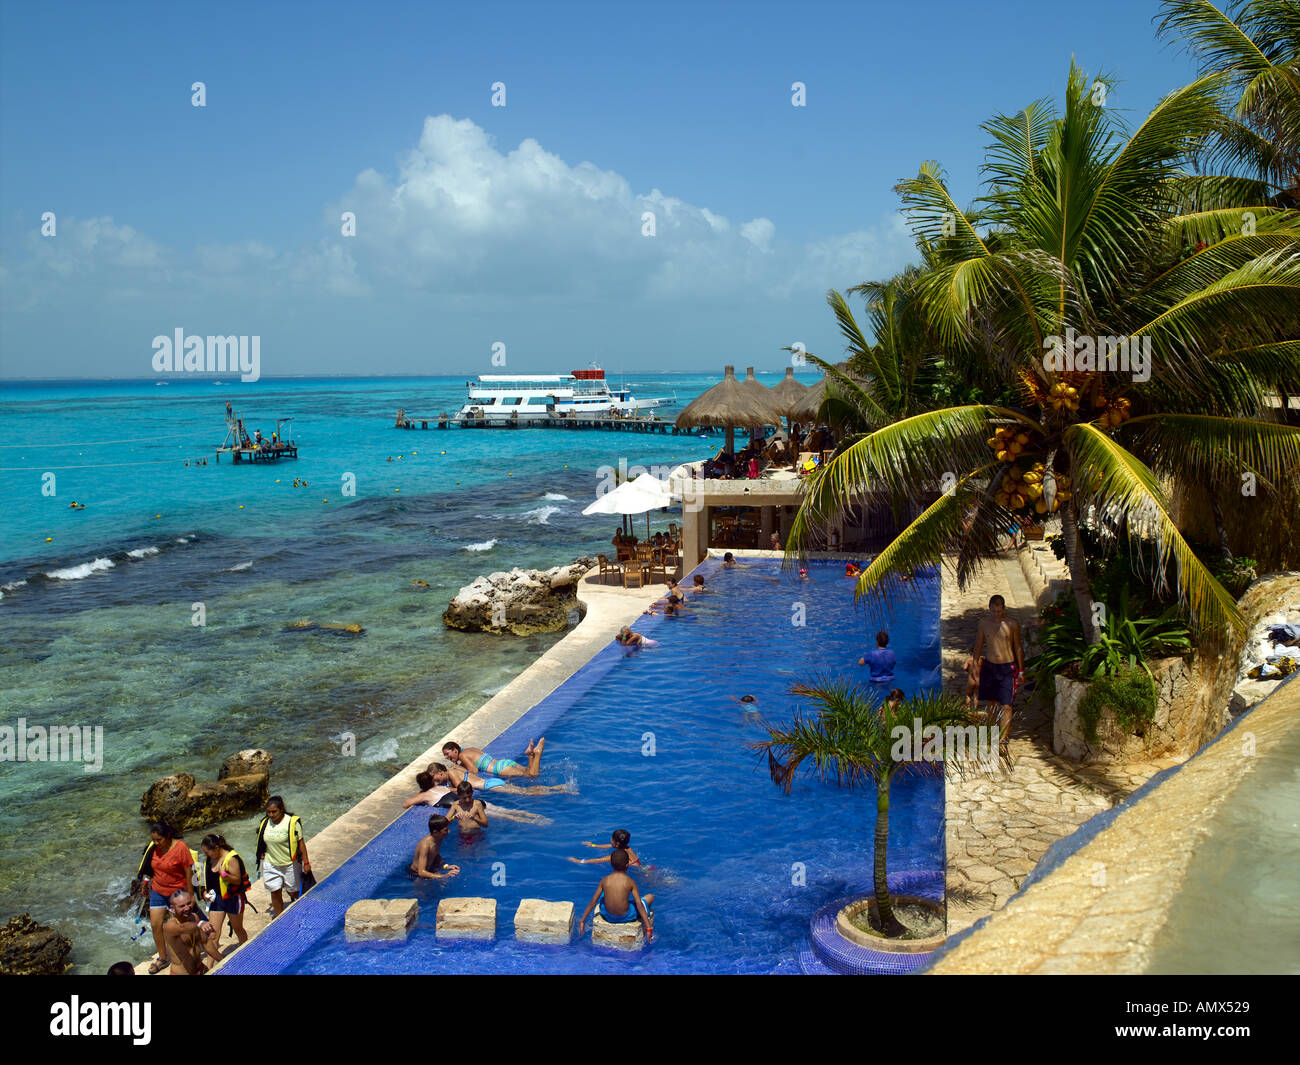 Isla Mujeres, El Garrafon, Swimming Pool Stock Photo - Alamy